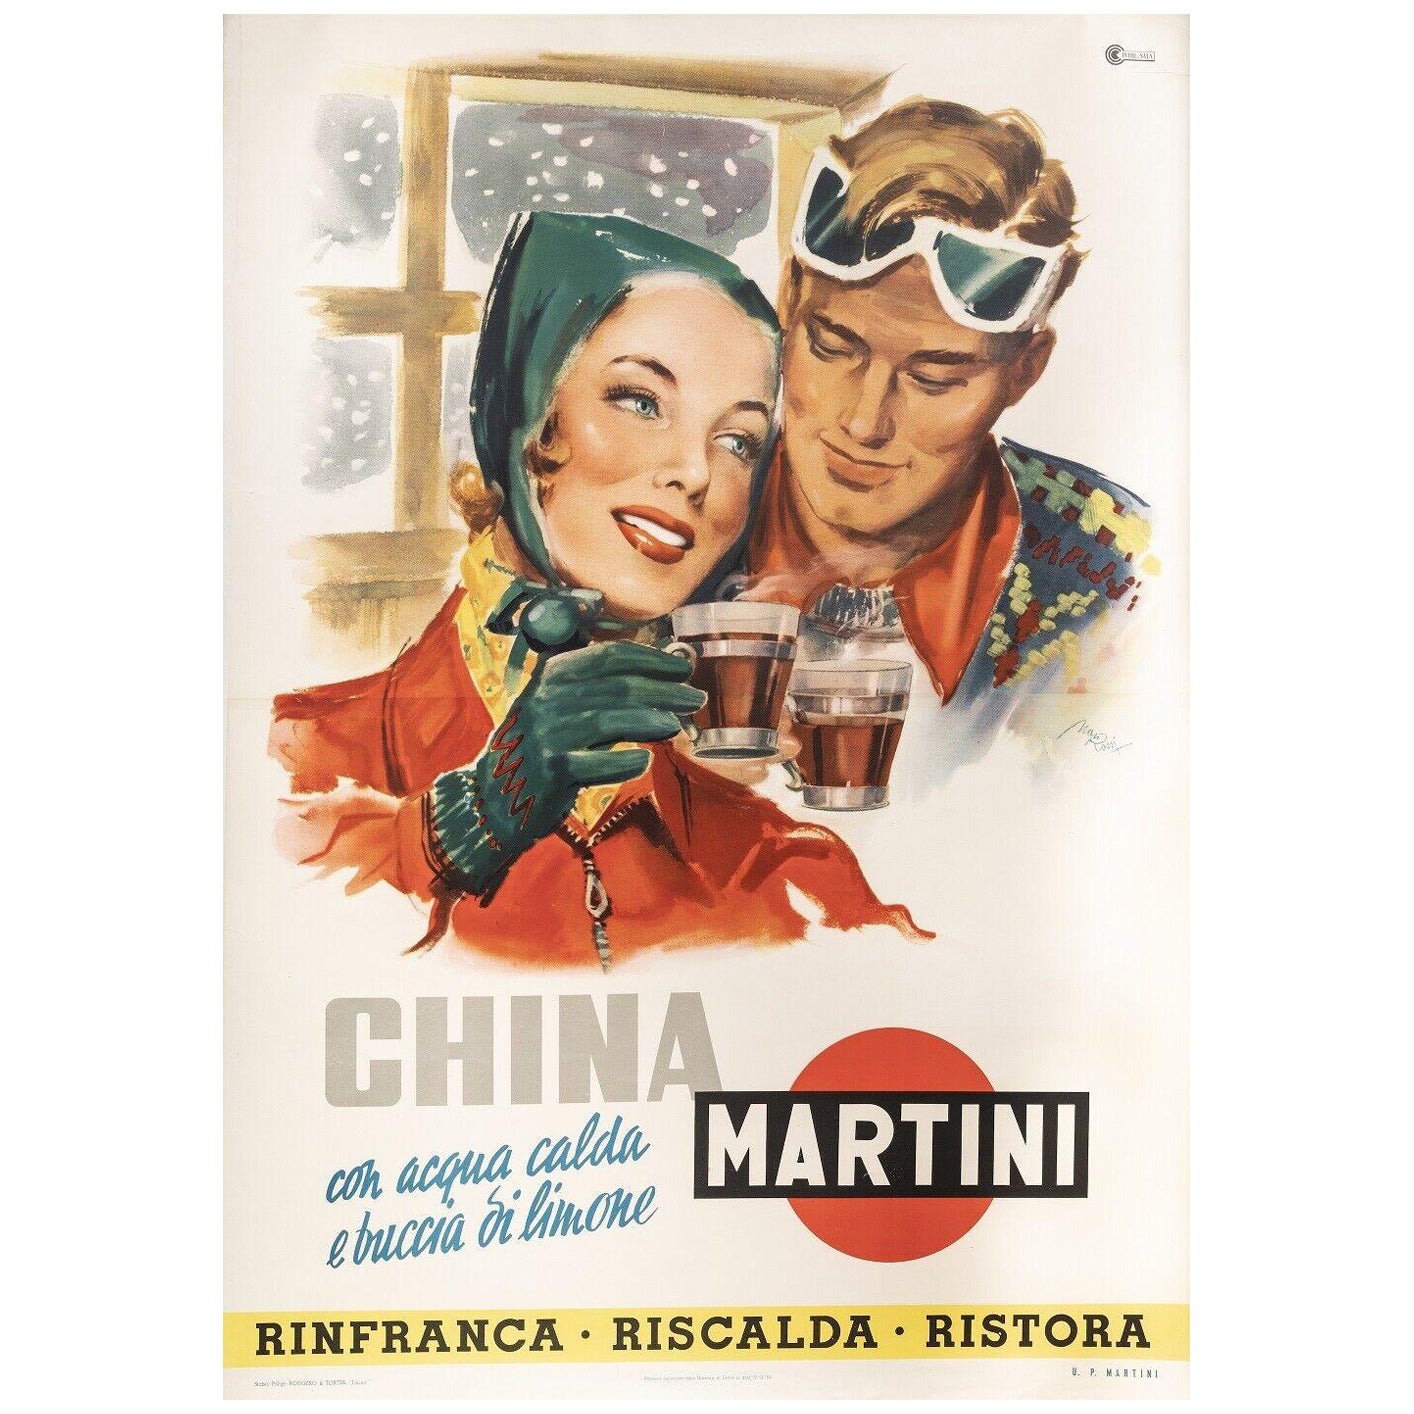 Original Italian Vintage Poster-Rossi M.-China Martini-Quinquina-Ski, 1950 For Sale